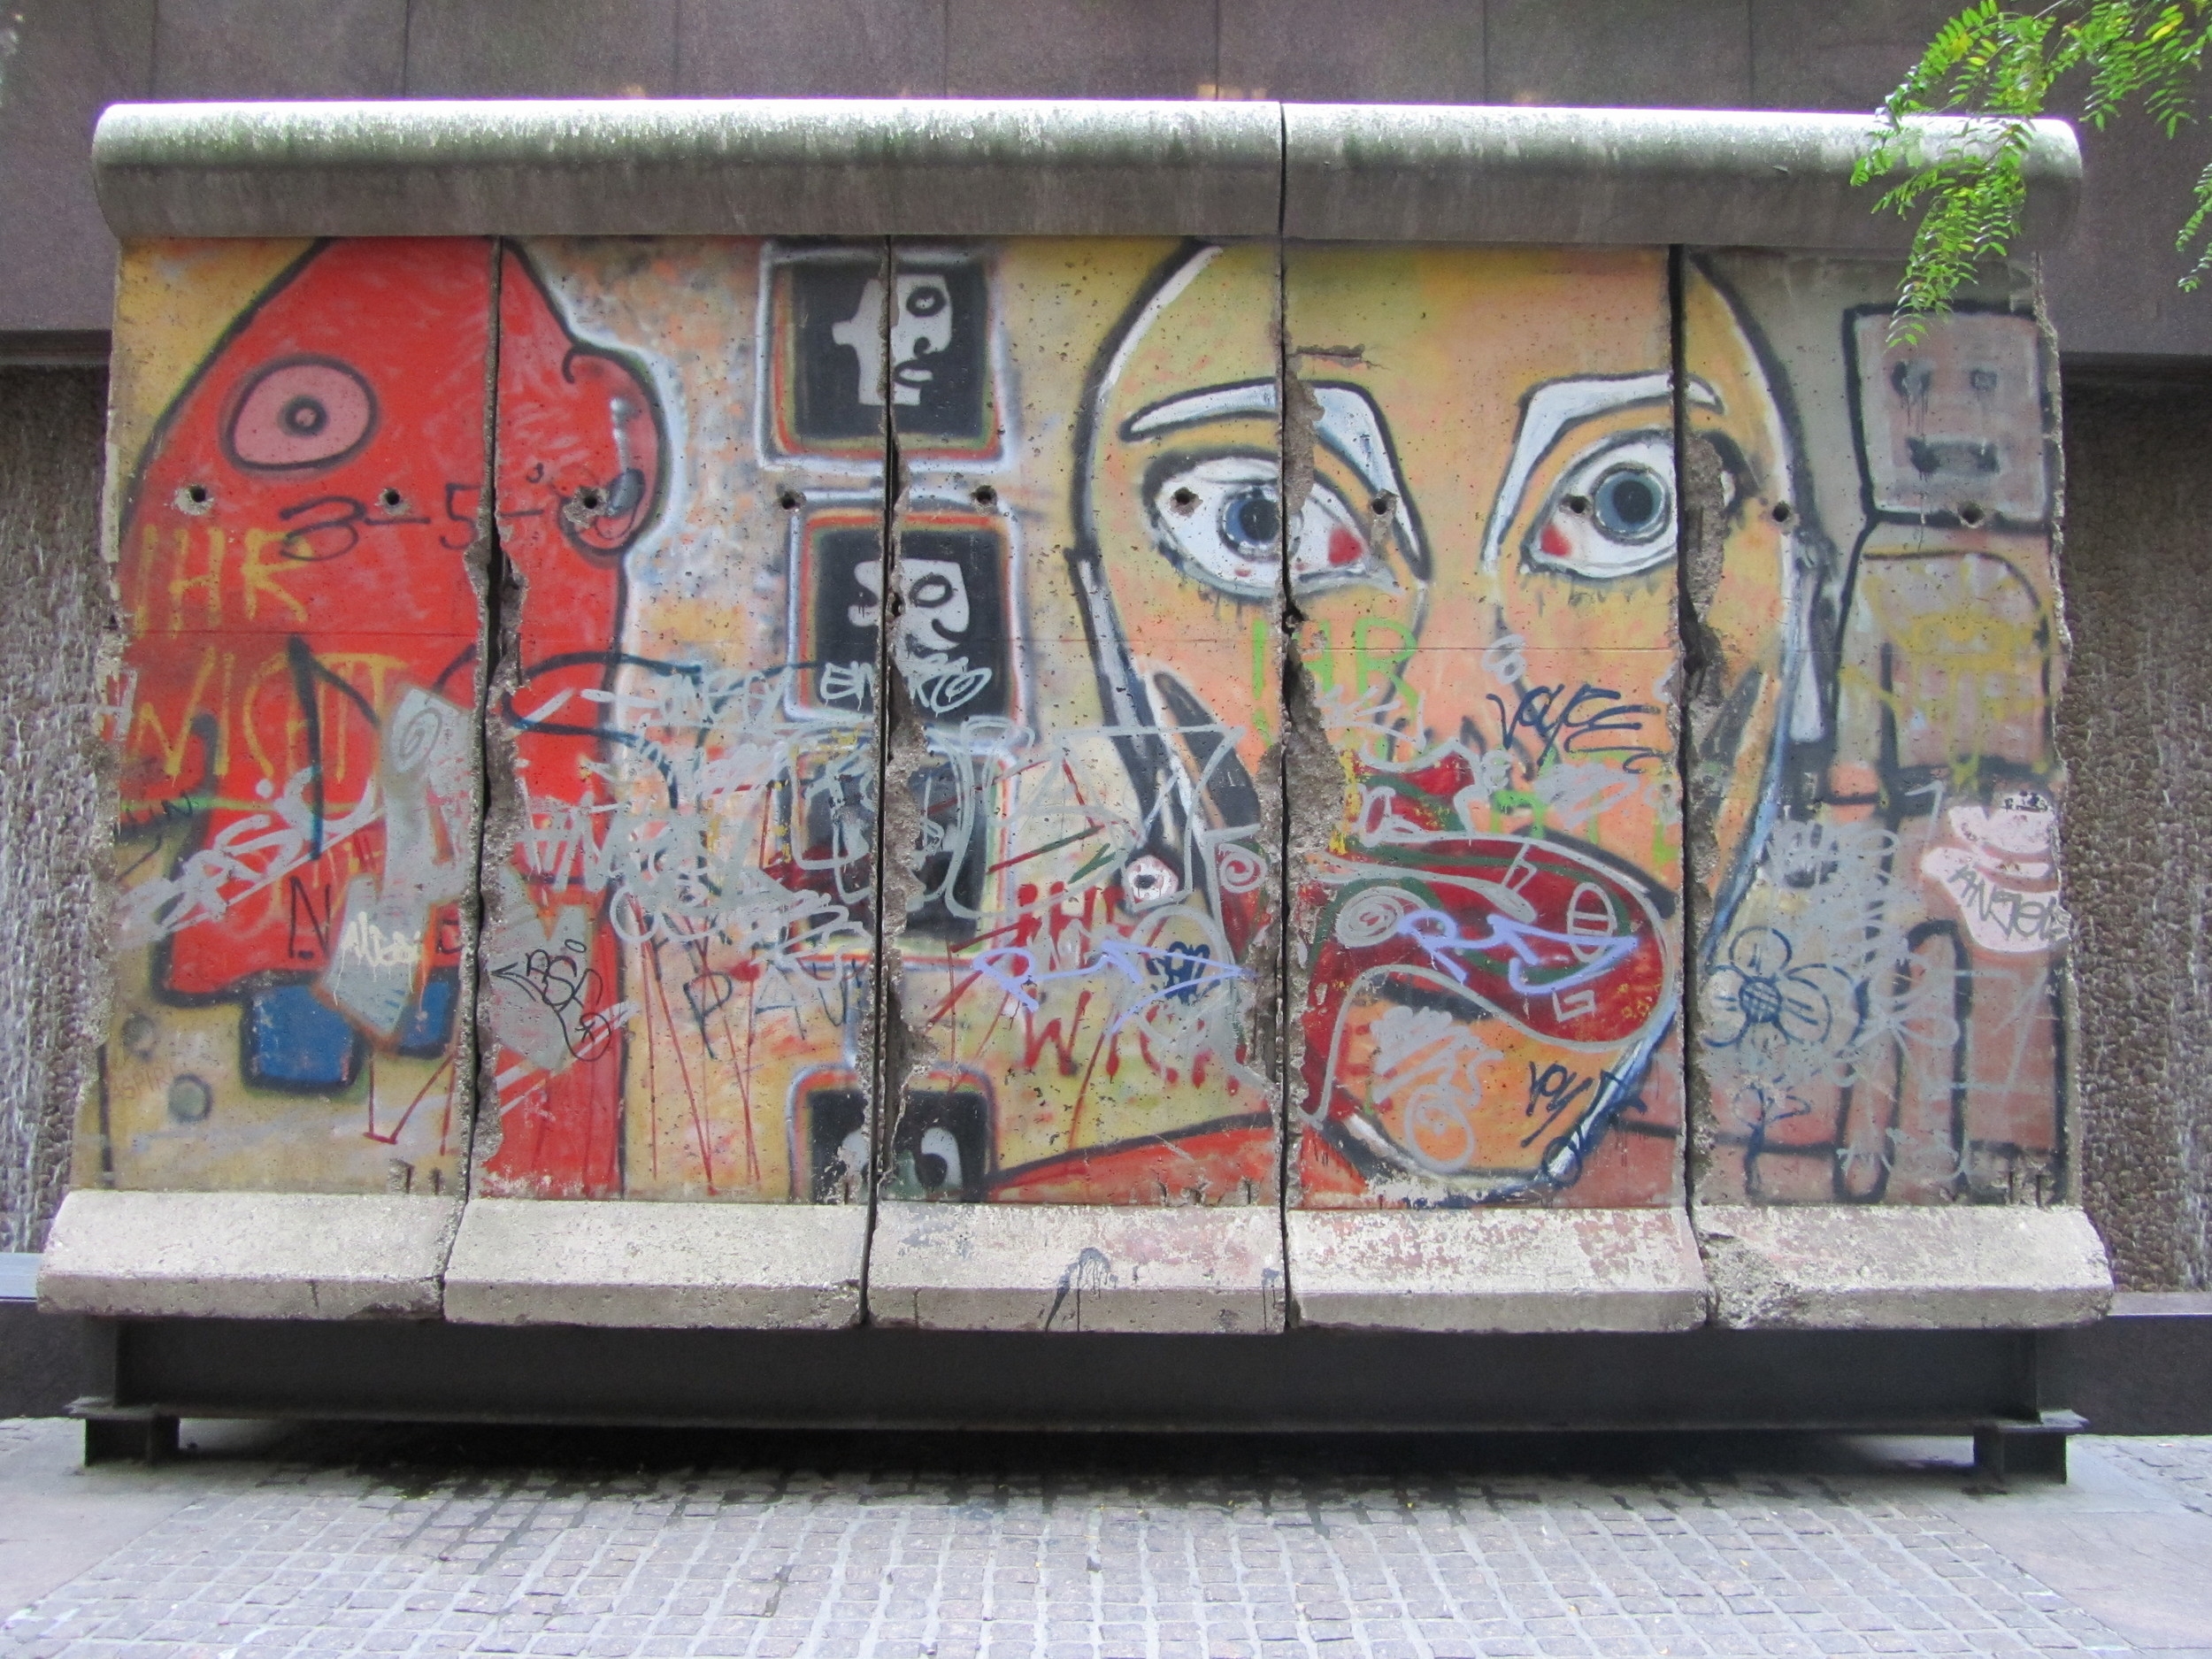  Mural imagery prior to the 2014 graffiti vandalism.  Image © Tishman Speyer, 2010    